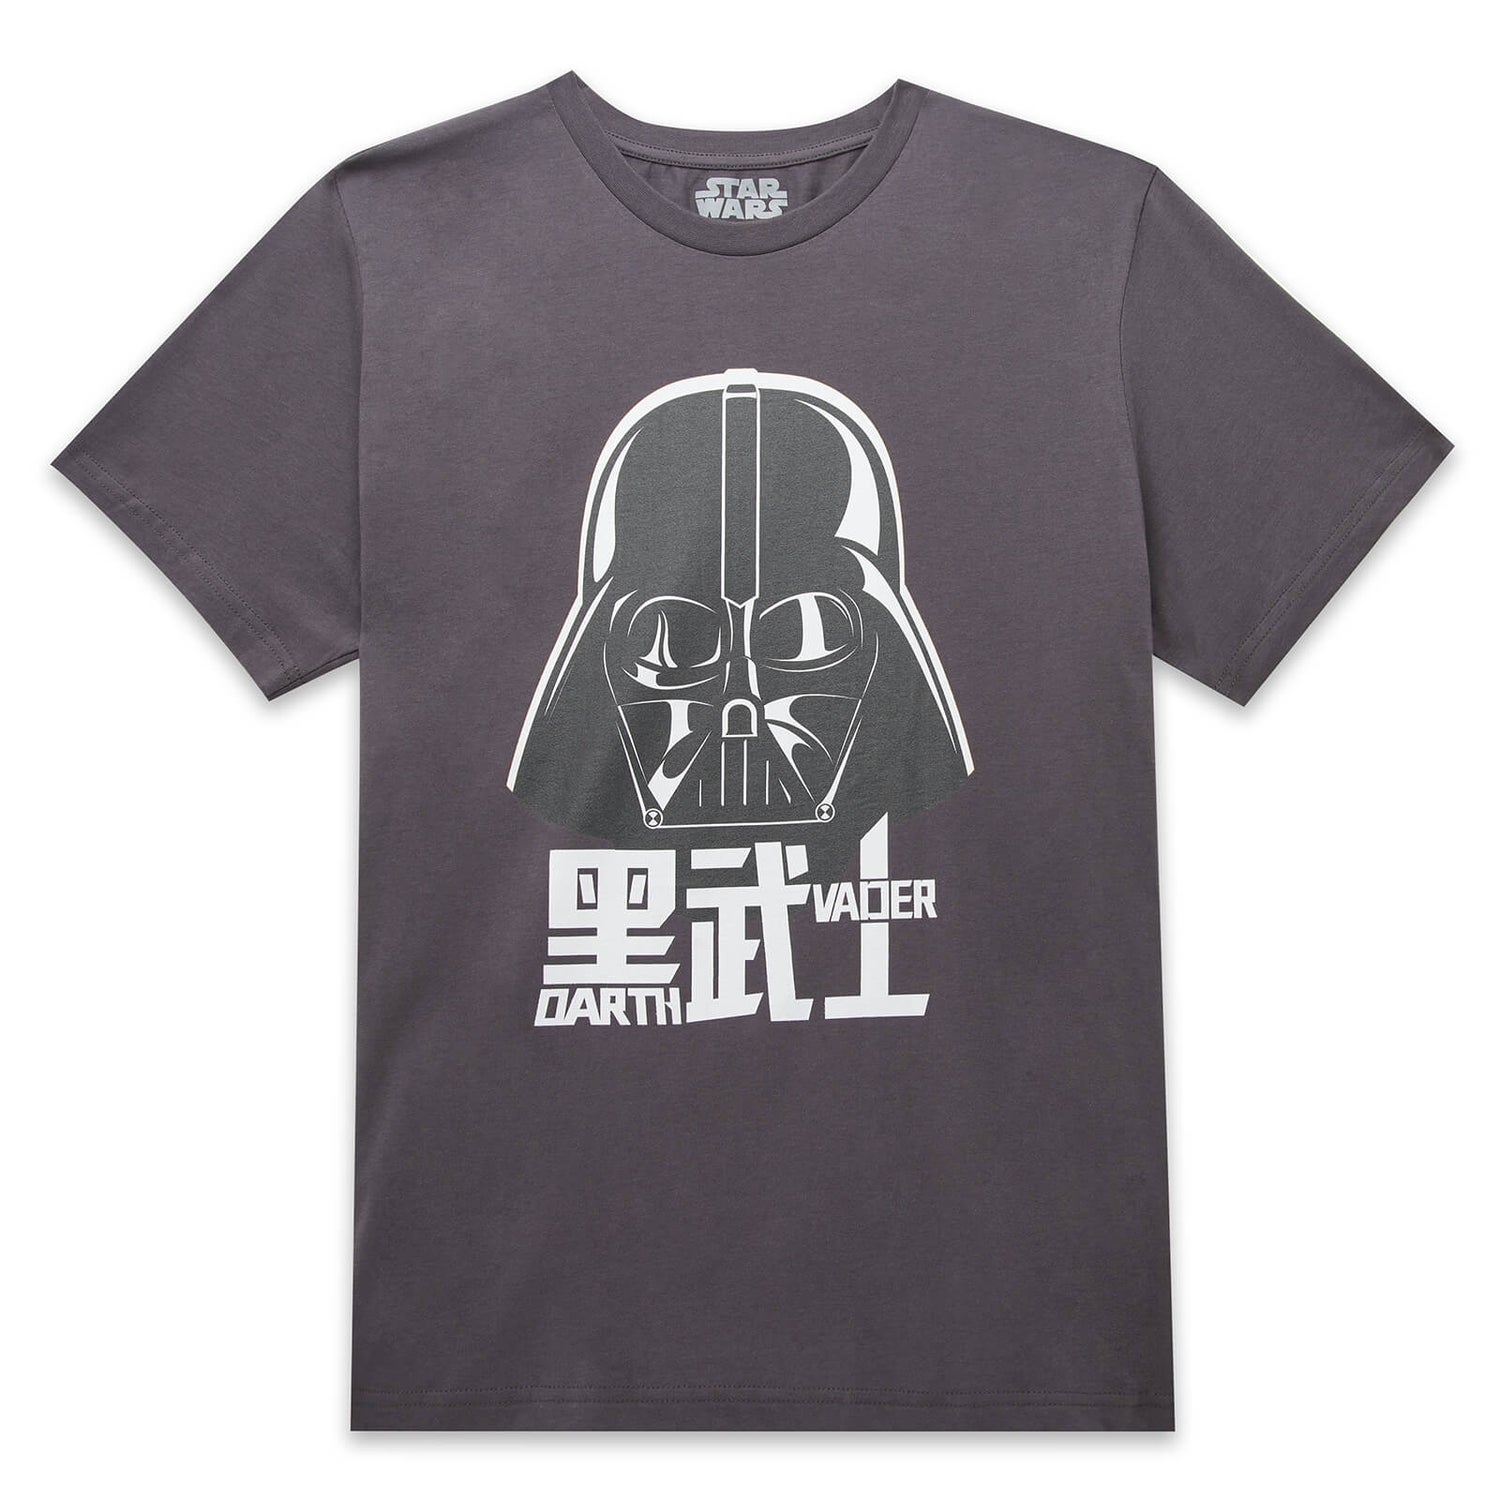 Star Wars Darth Vader Unisex T-Shirt - Charcoal